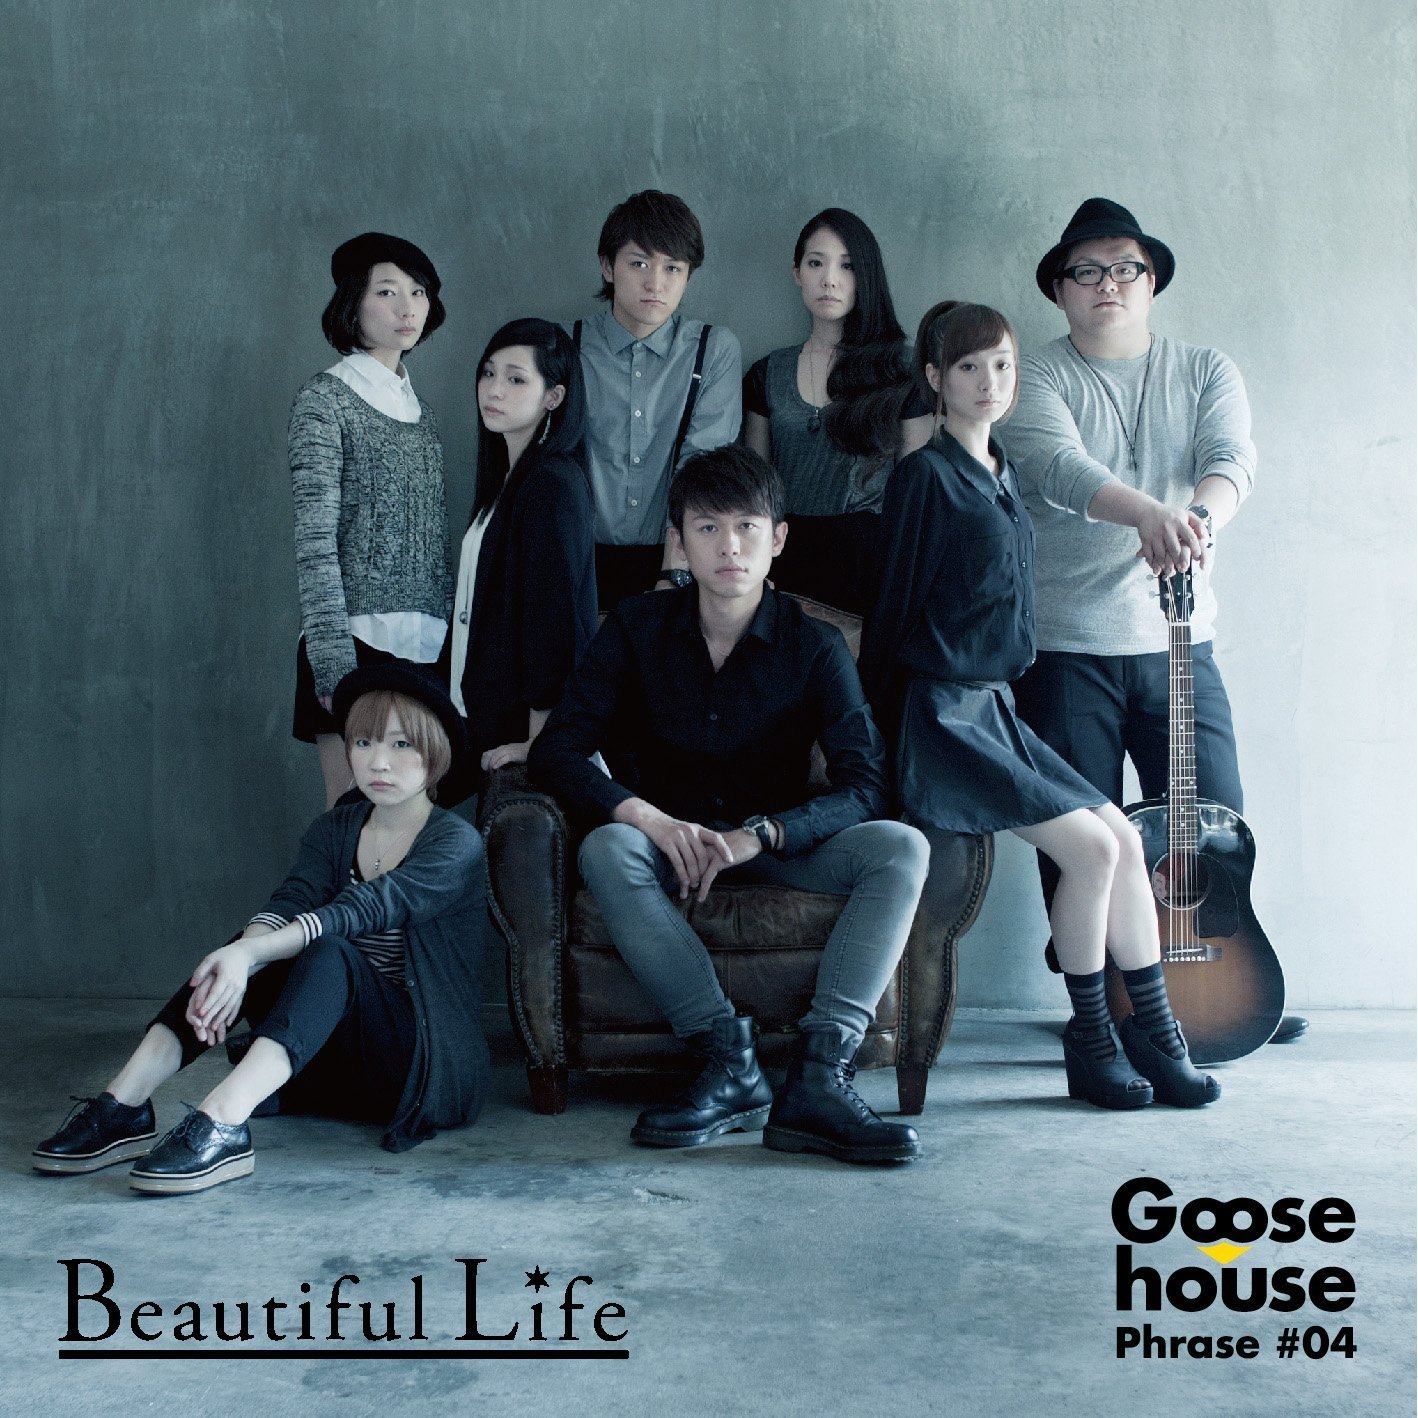 Goose house Phrase #04 Beautiful Life — Goose house | Last.fm